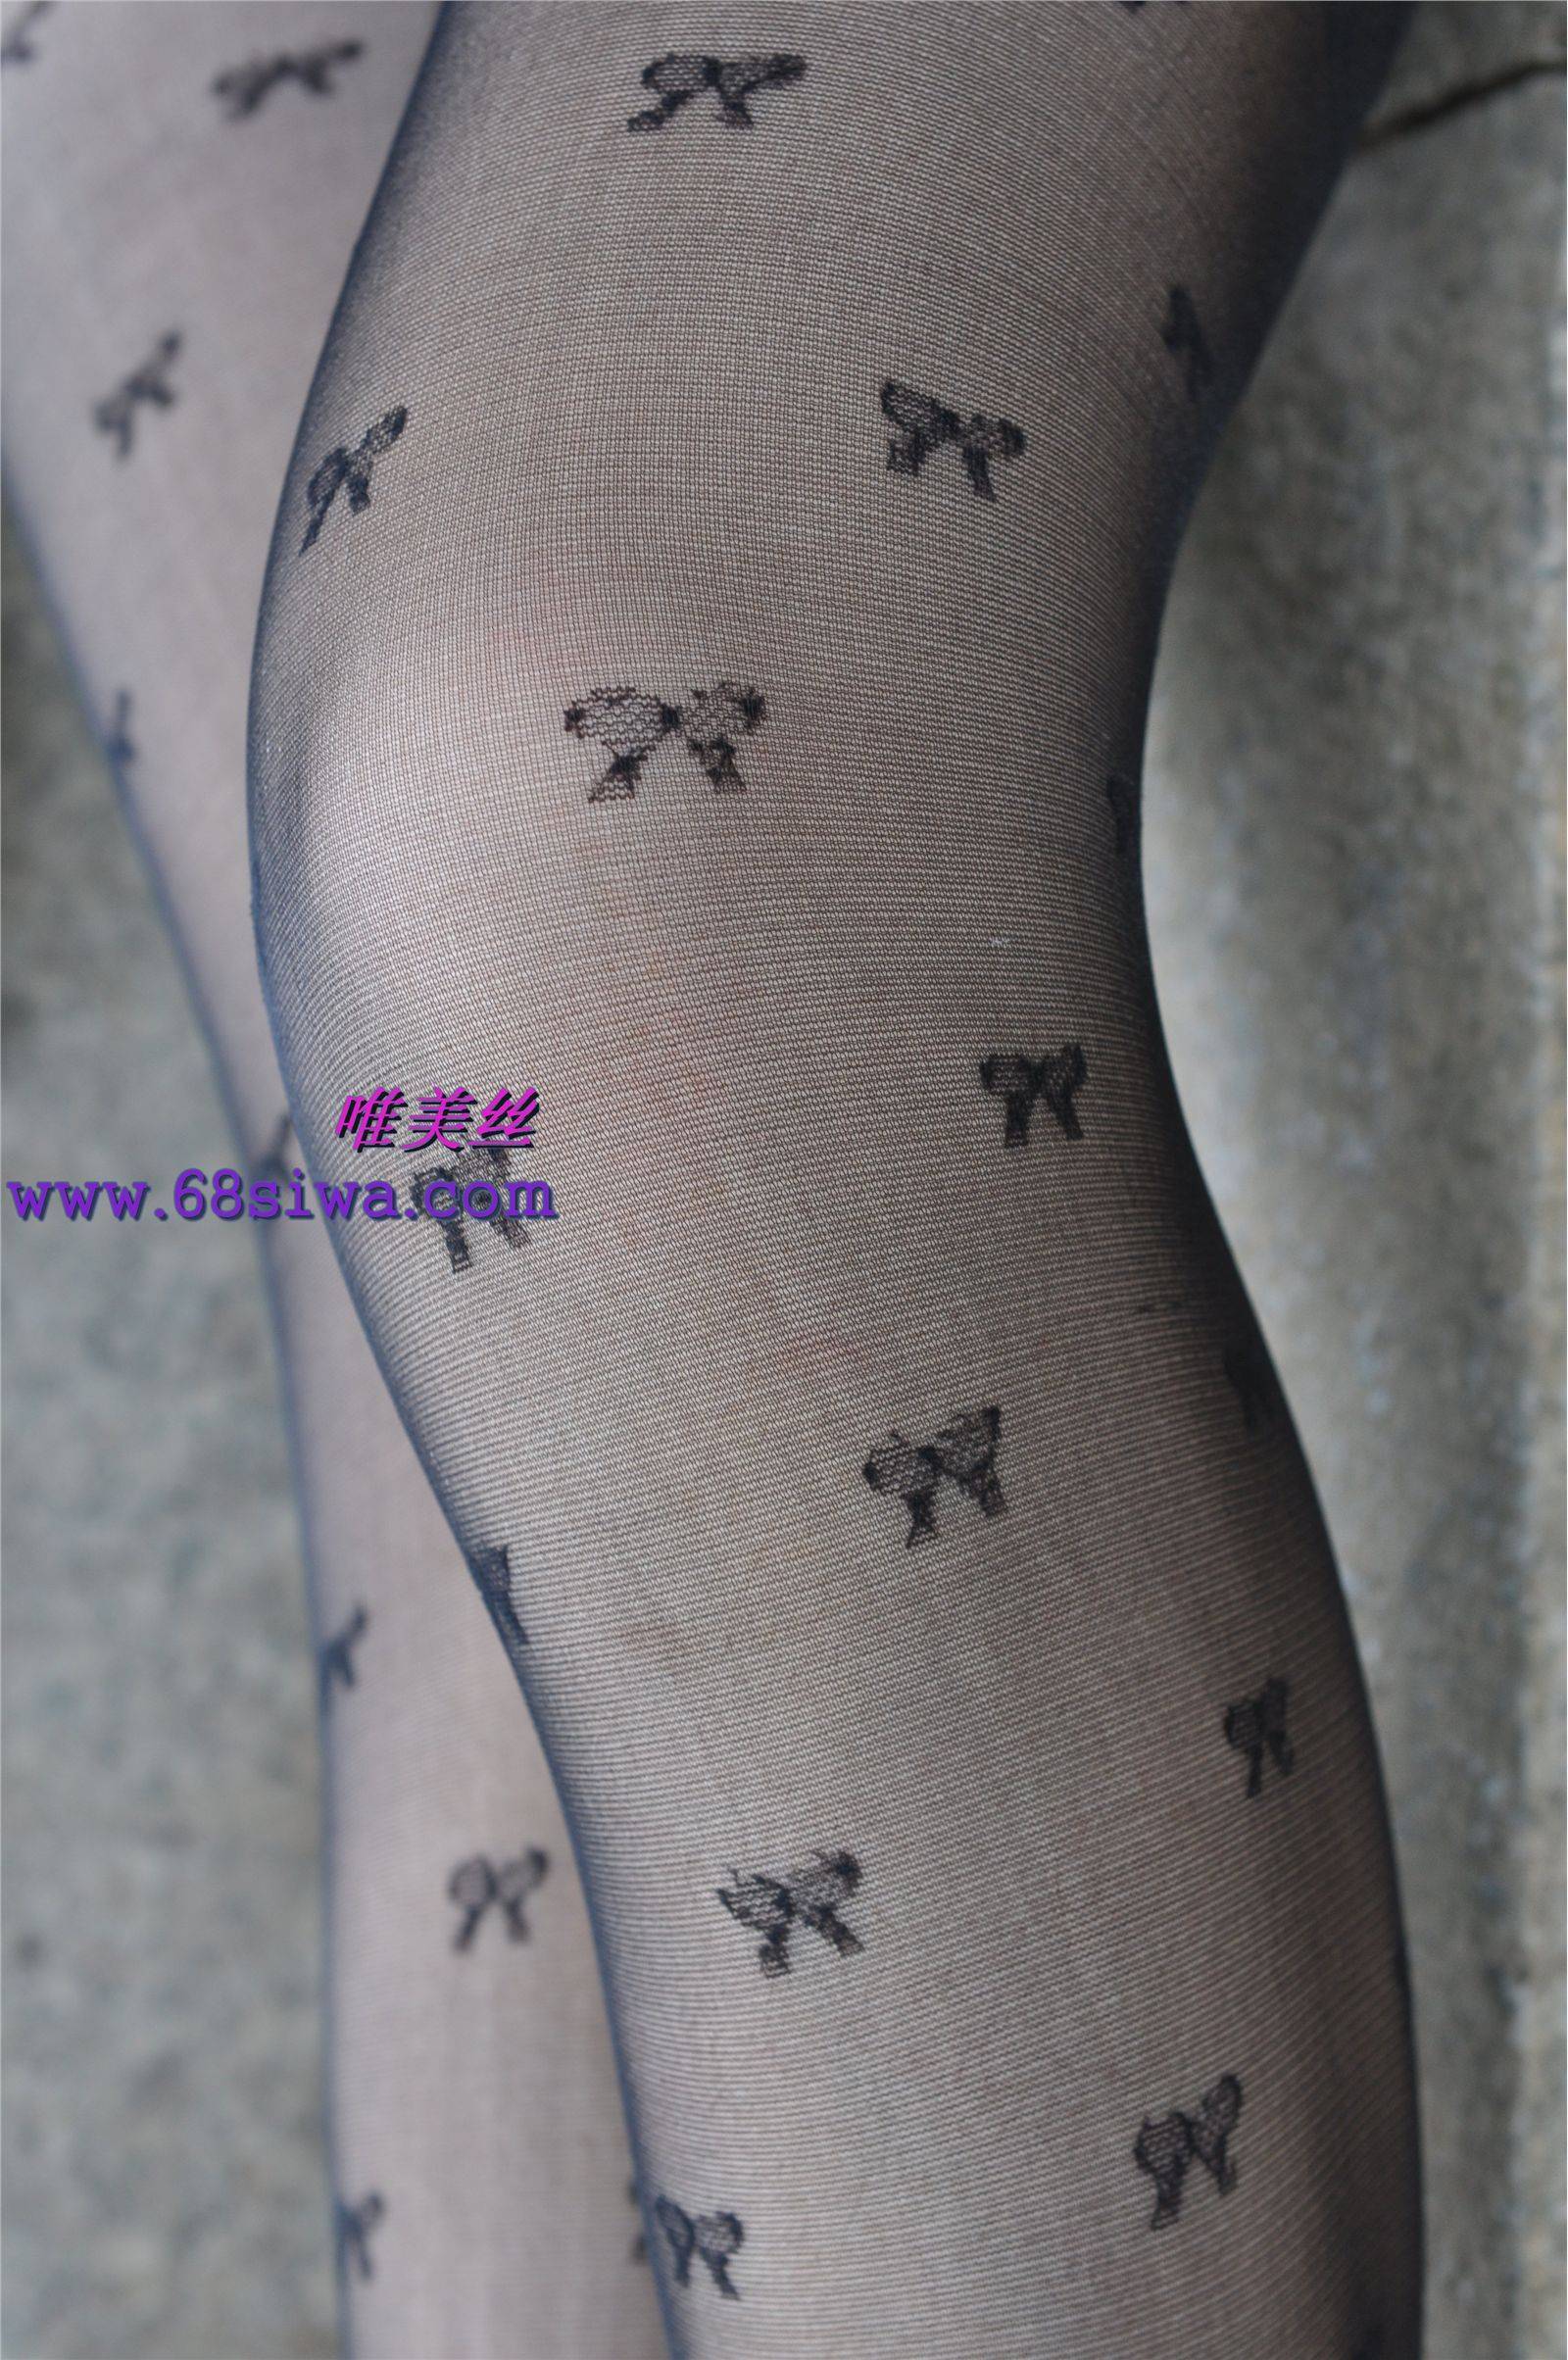 Meimei silk 11006 quietly domestic original silk stockings foot set